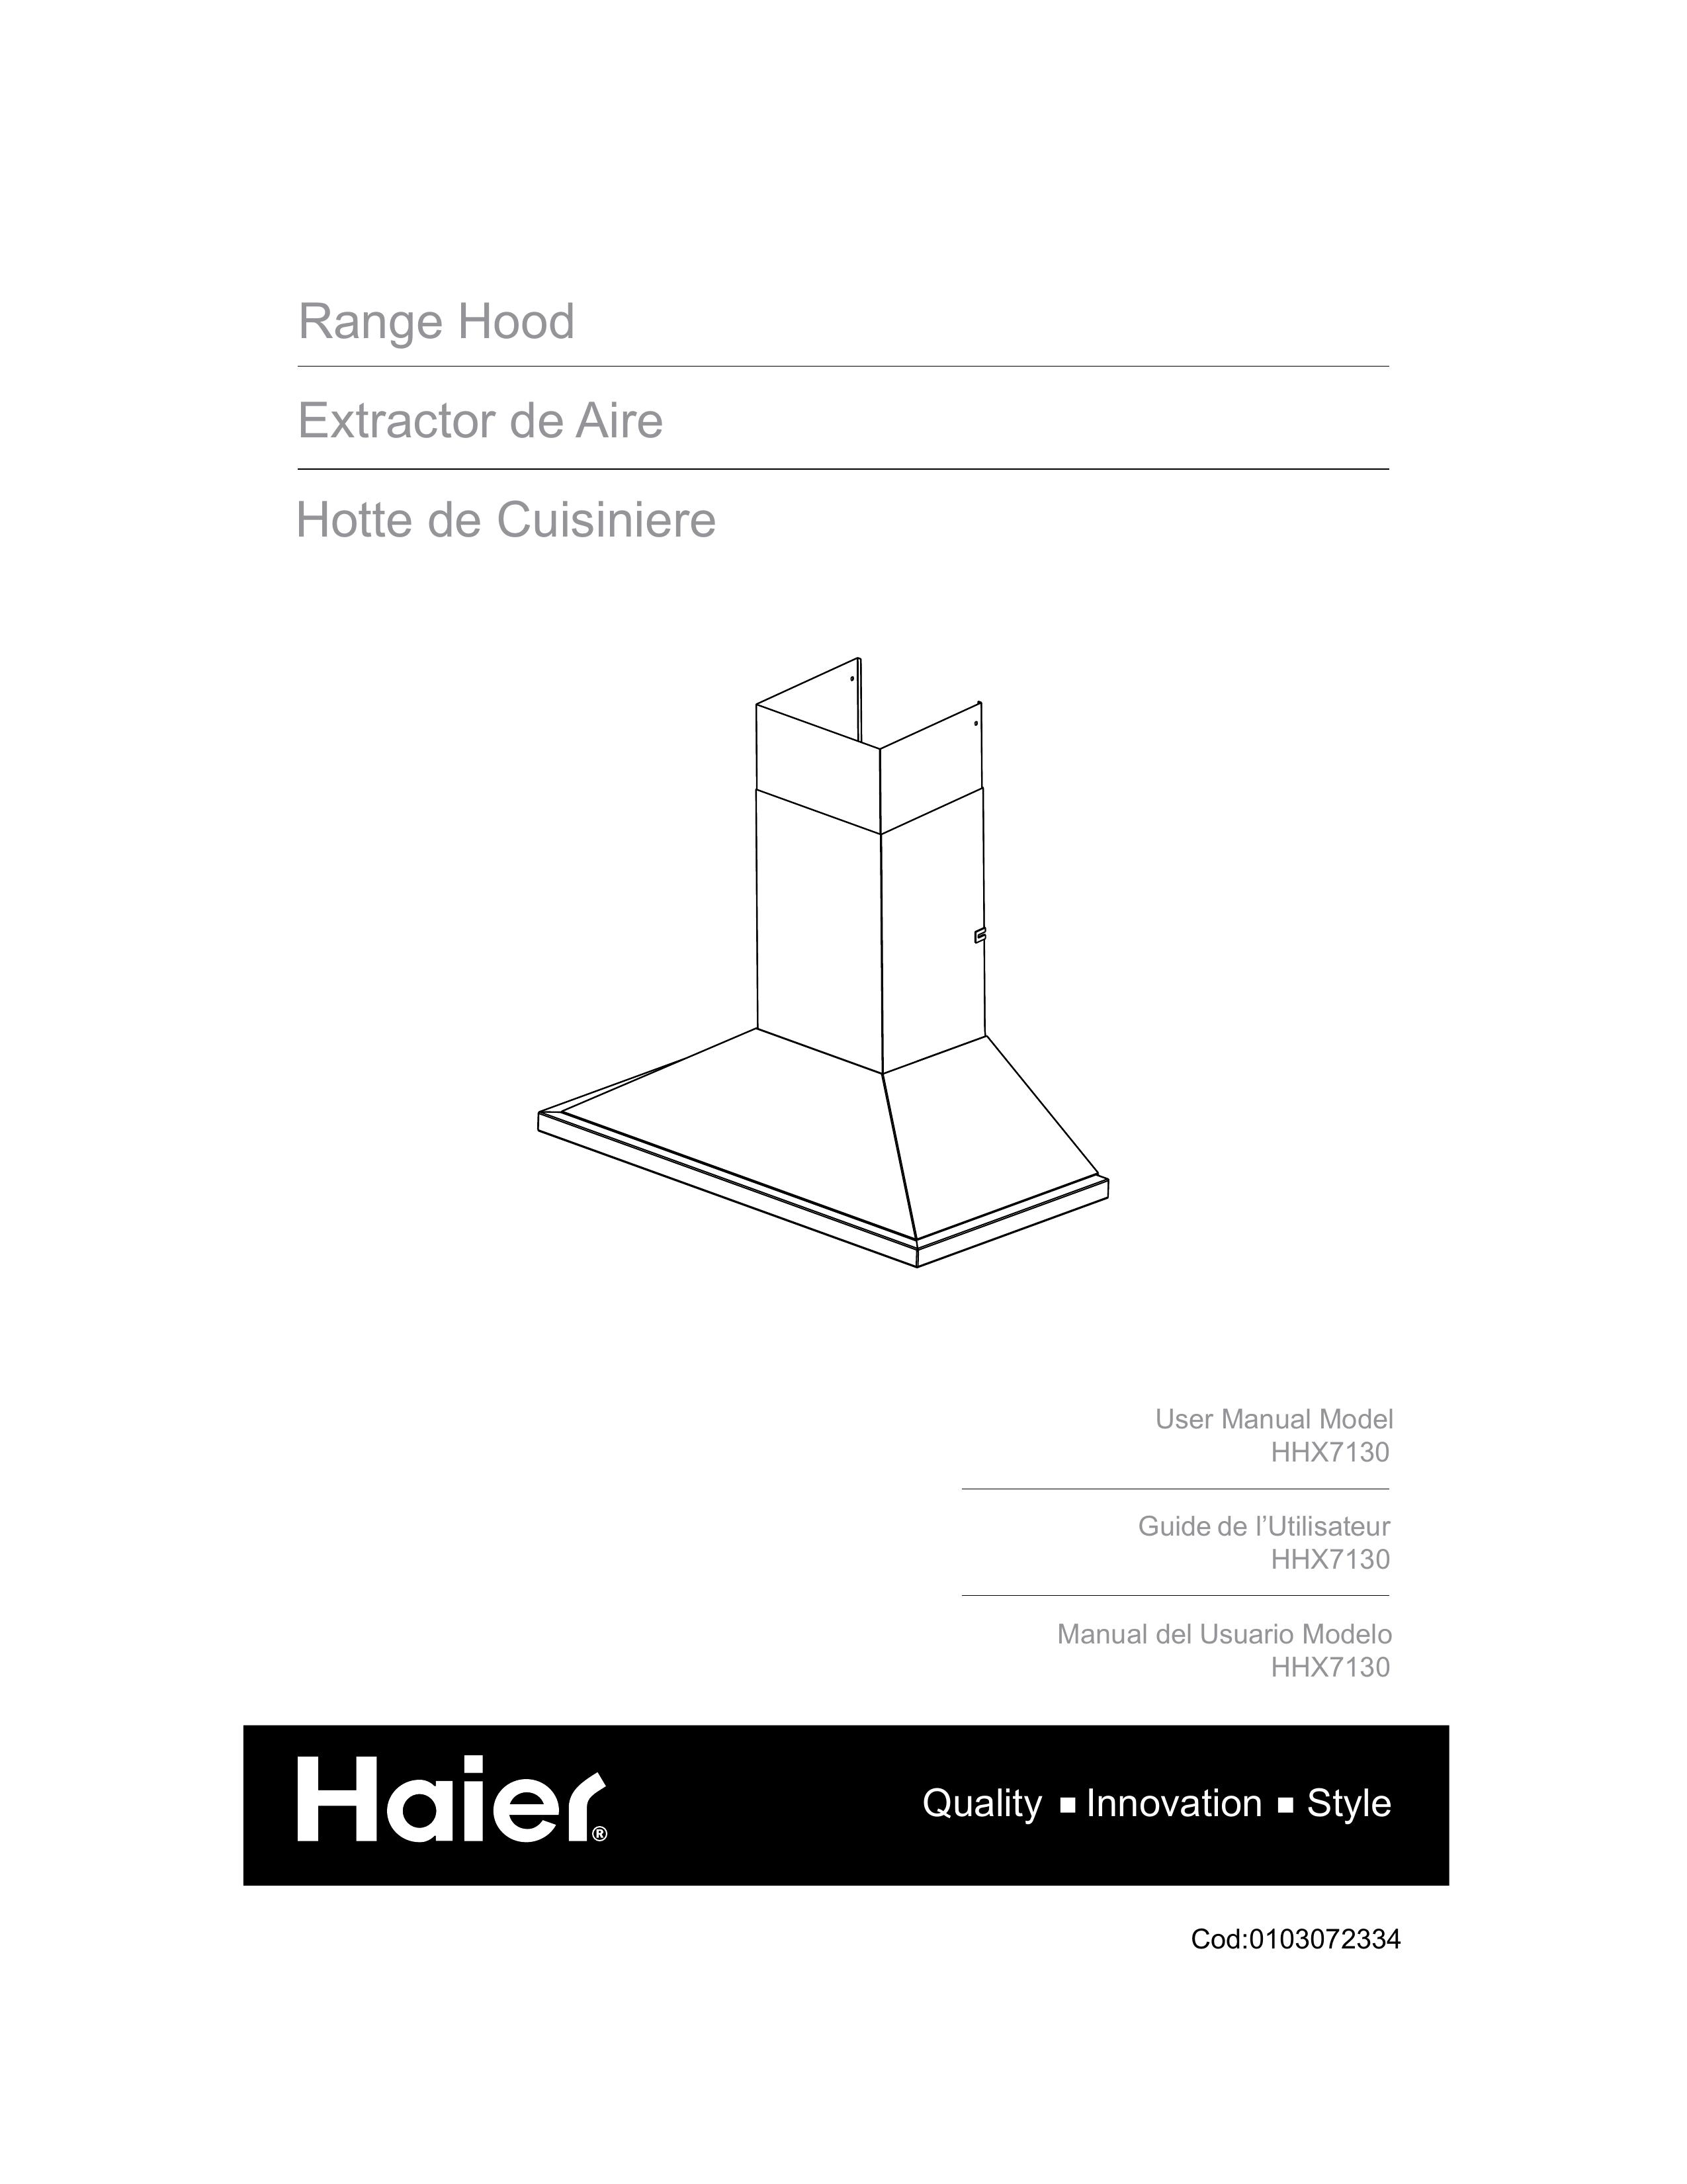 Haier HHX7130 Ventilation Hood User Manual